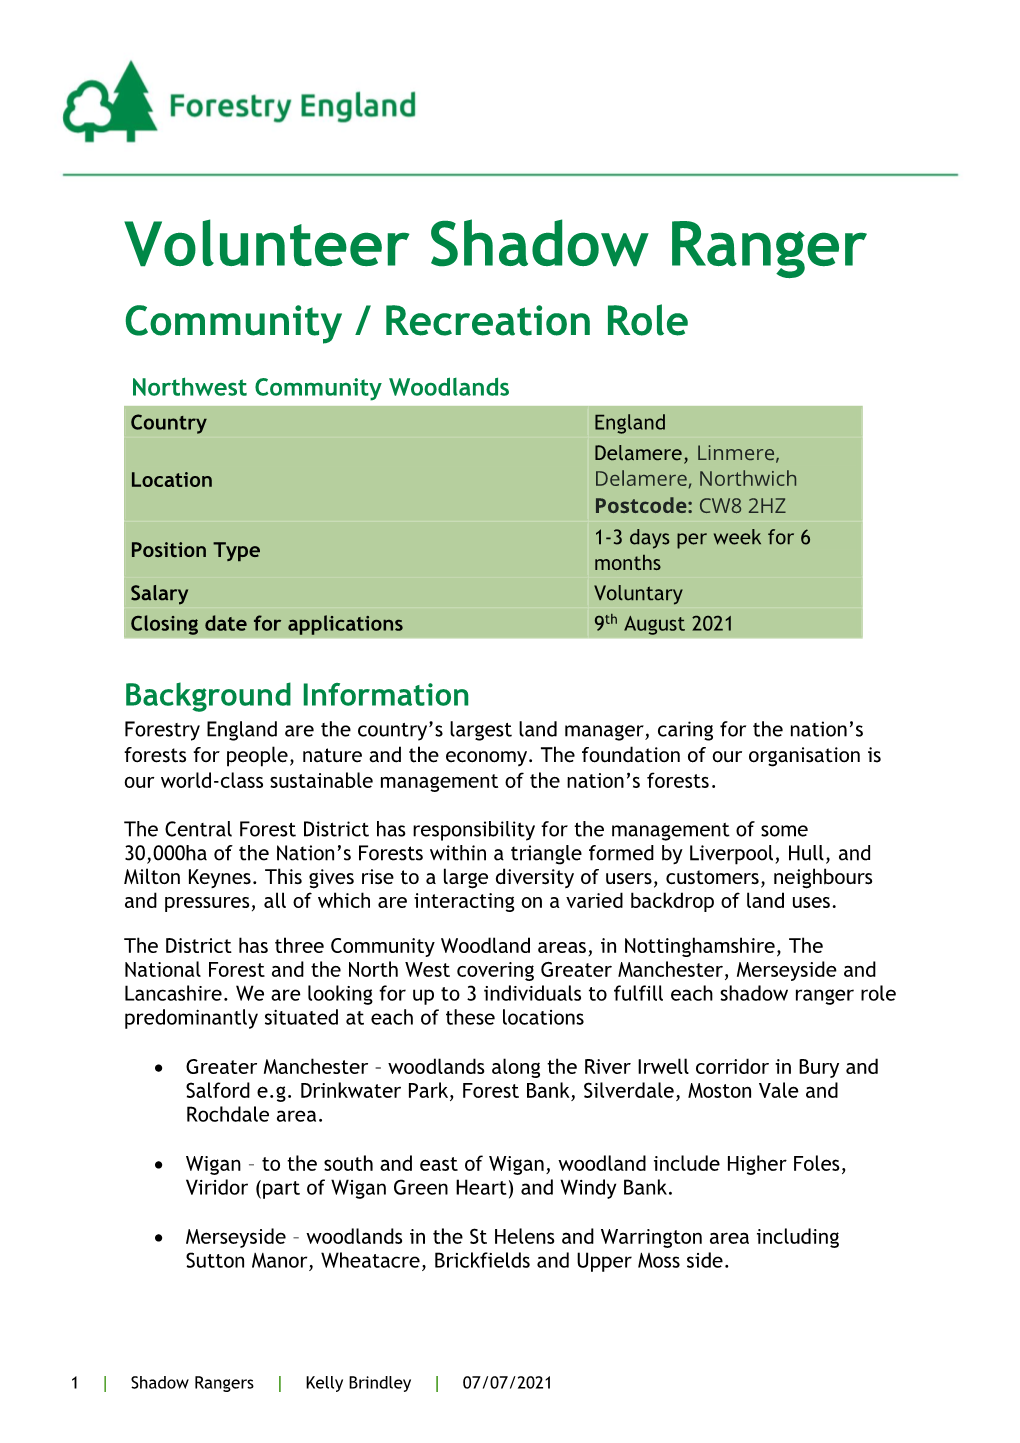 Volunteer Shadow Ranger Community / Recreation Role